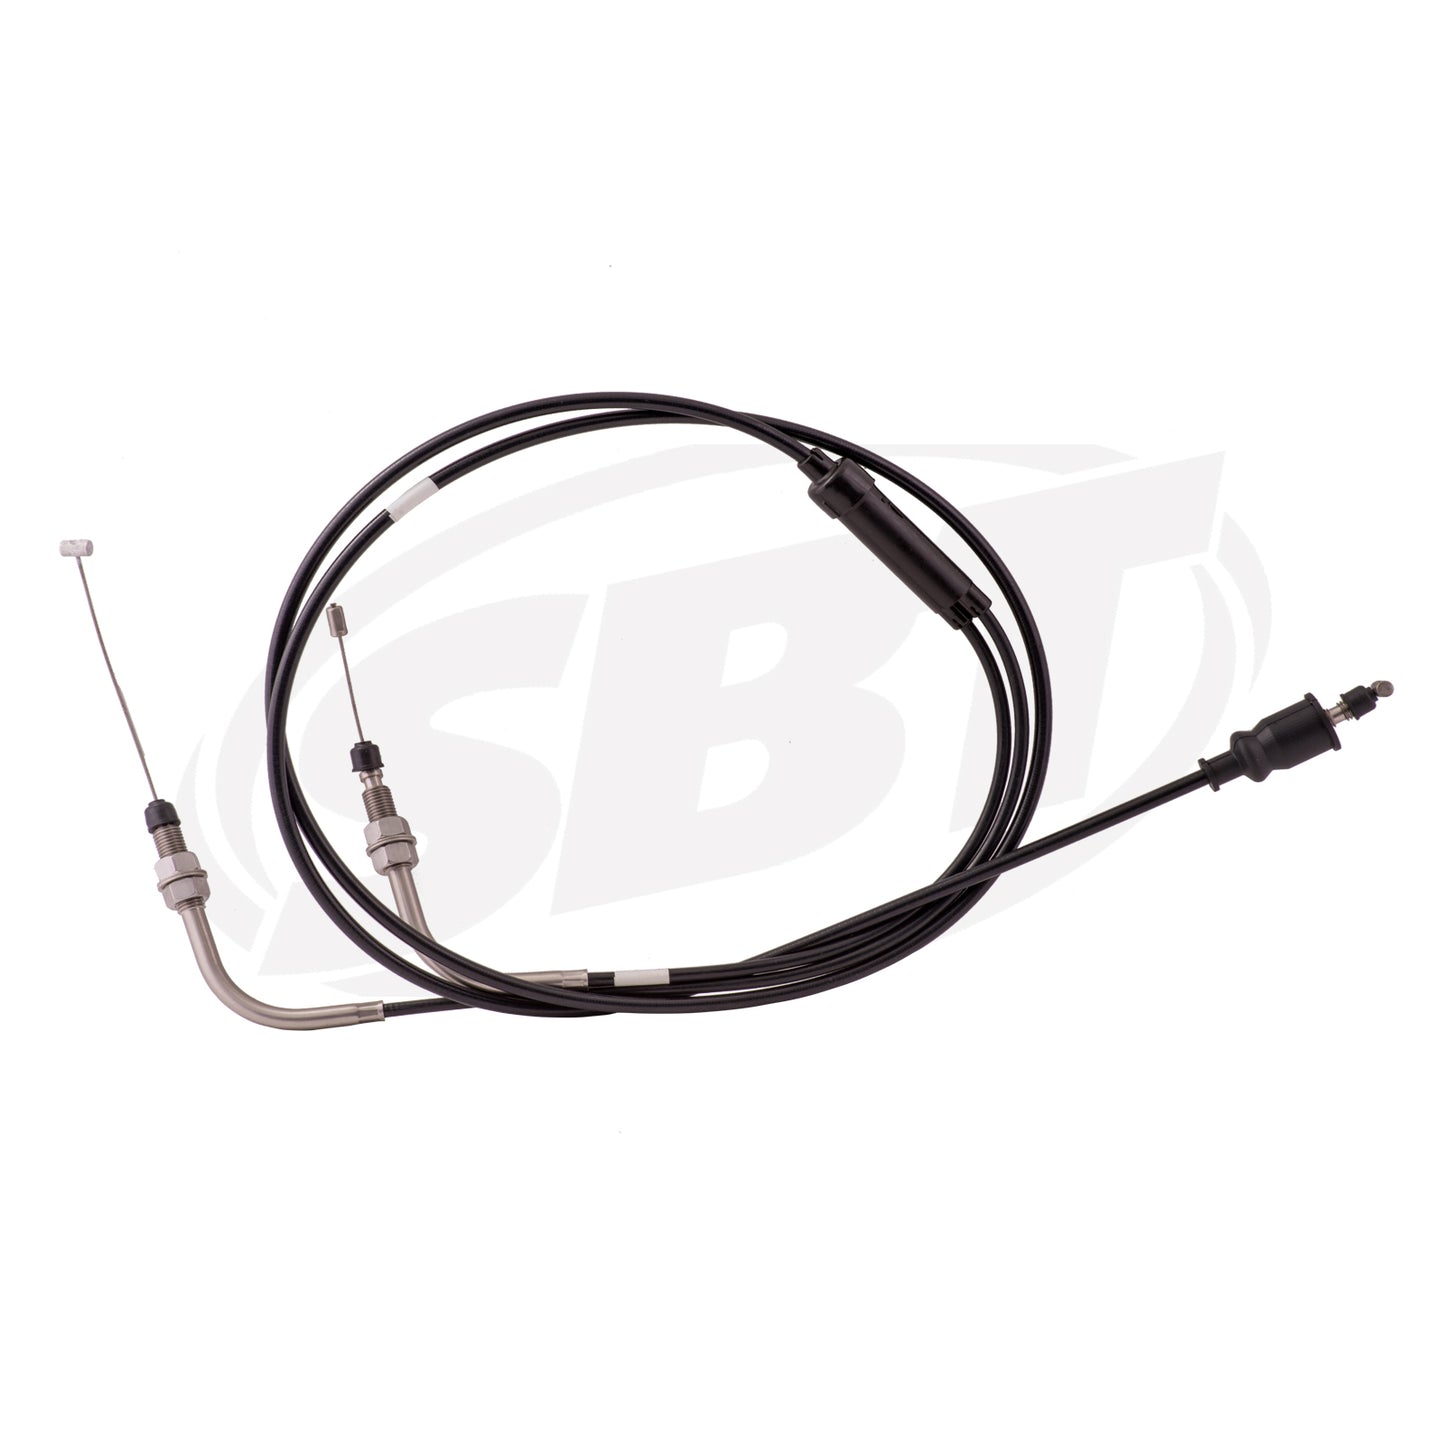 SBT Kawasaki Throttle Cable 1100 STX 1999 54012-3760